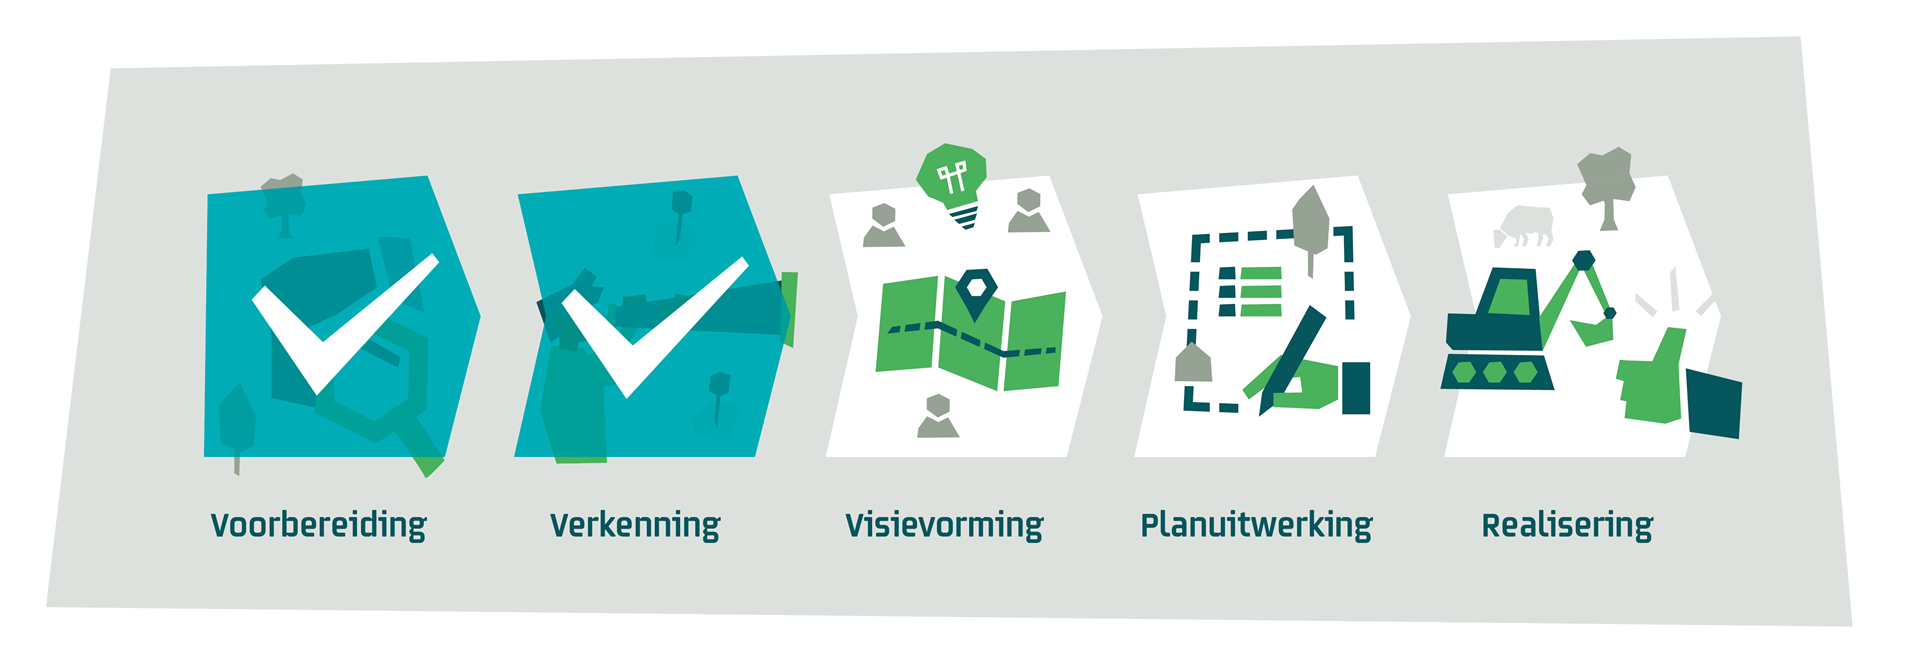 Globale fasering van het gebiedsproces: voorbereiding, verkenning, visievorming, planuitwerking, realisering. Gebiedsgerichte aanpak Brabantse Wal zit momenteel in de visievormingsfase.